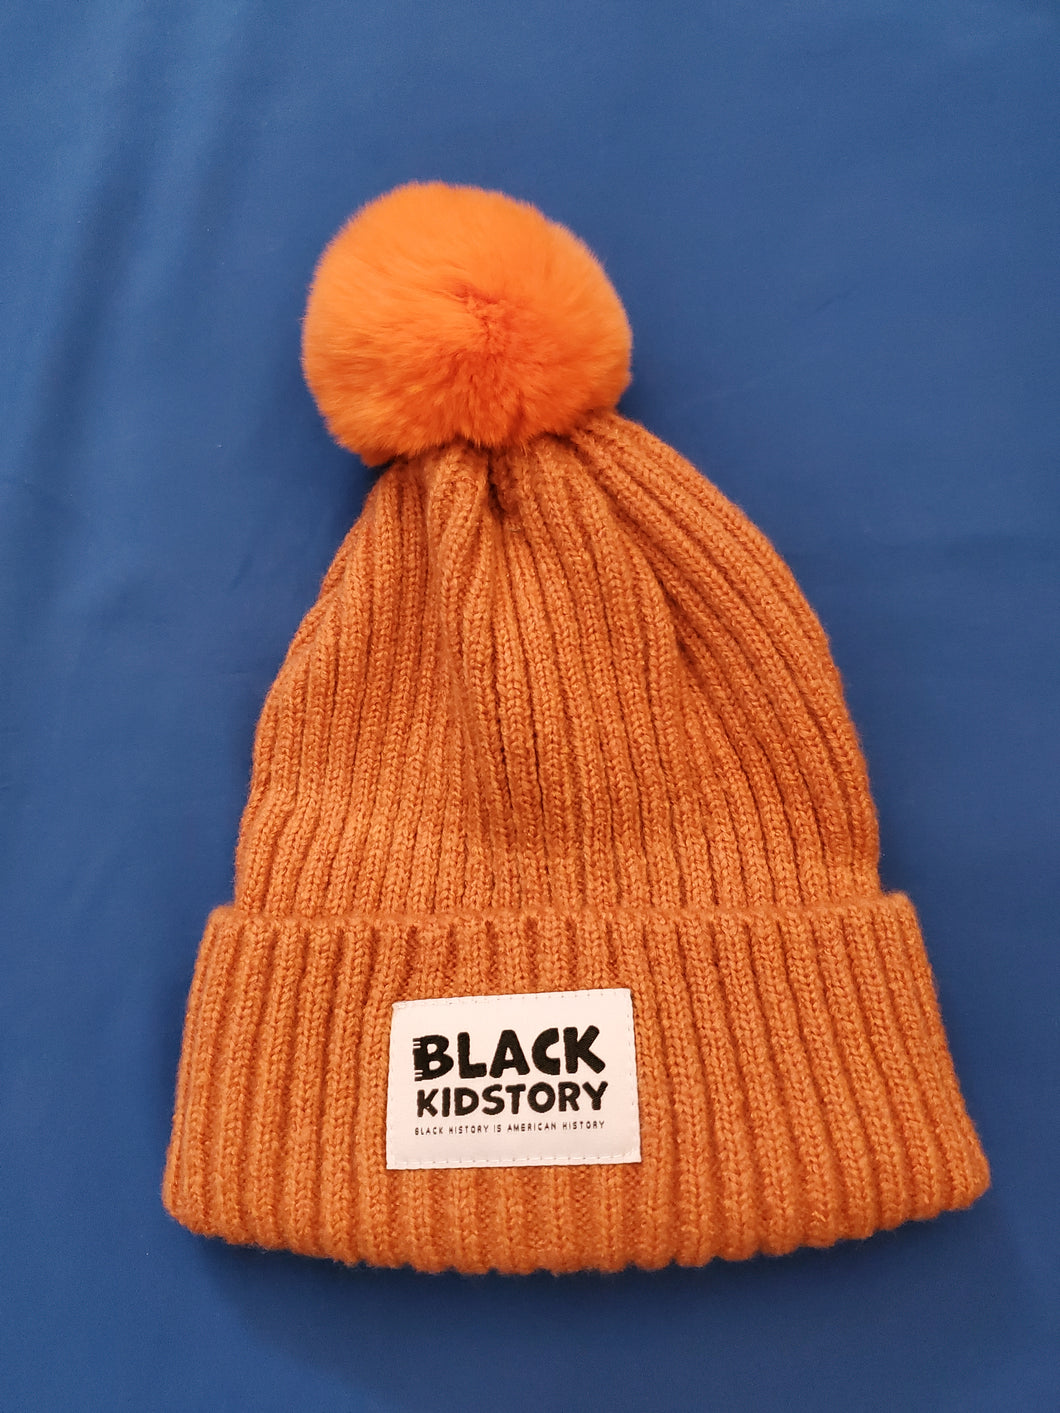 Black Kidstory Beanies/Winter Hats